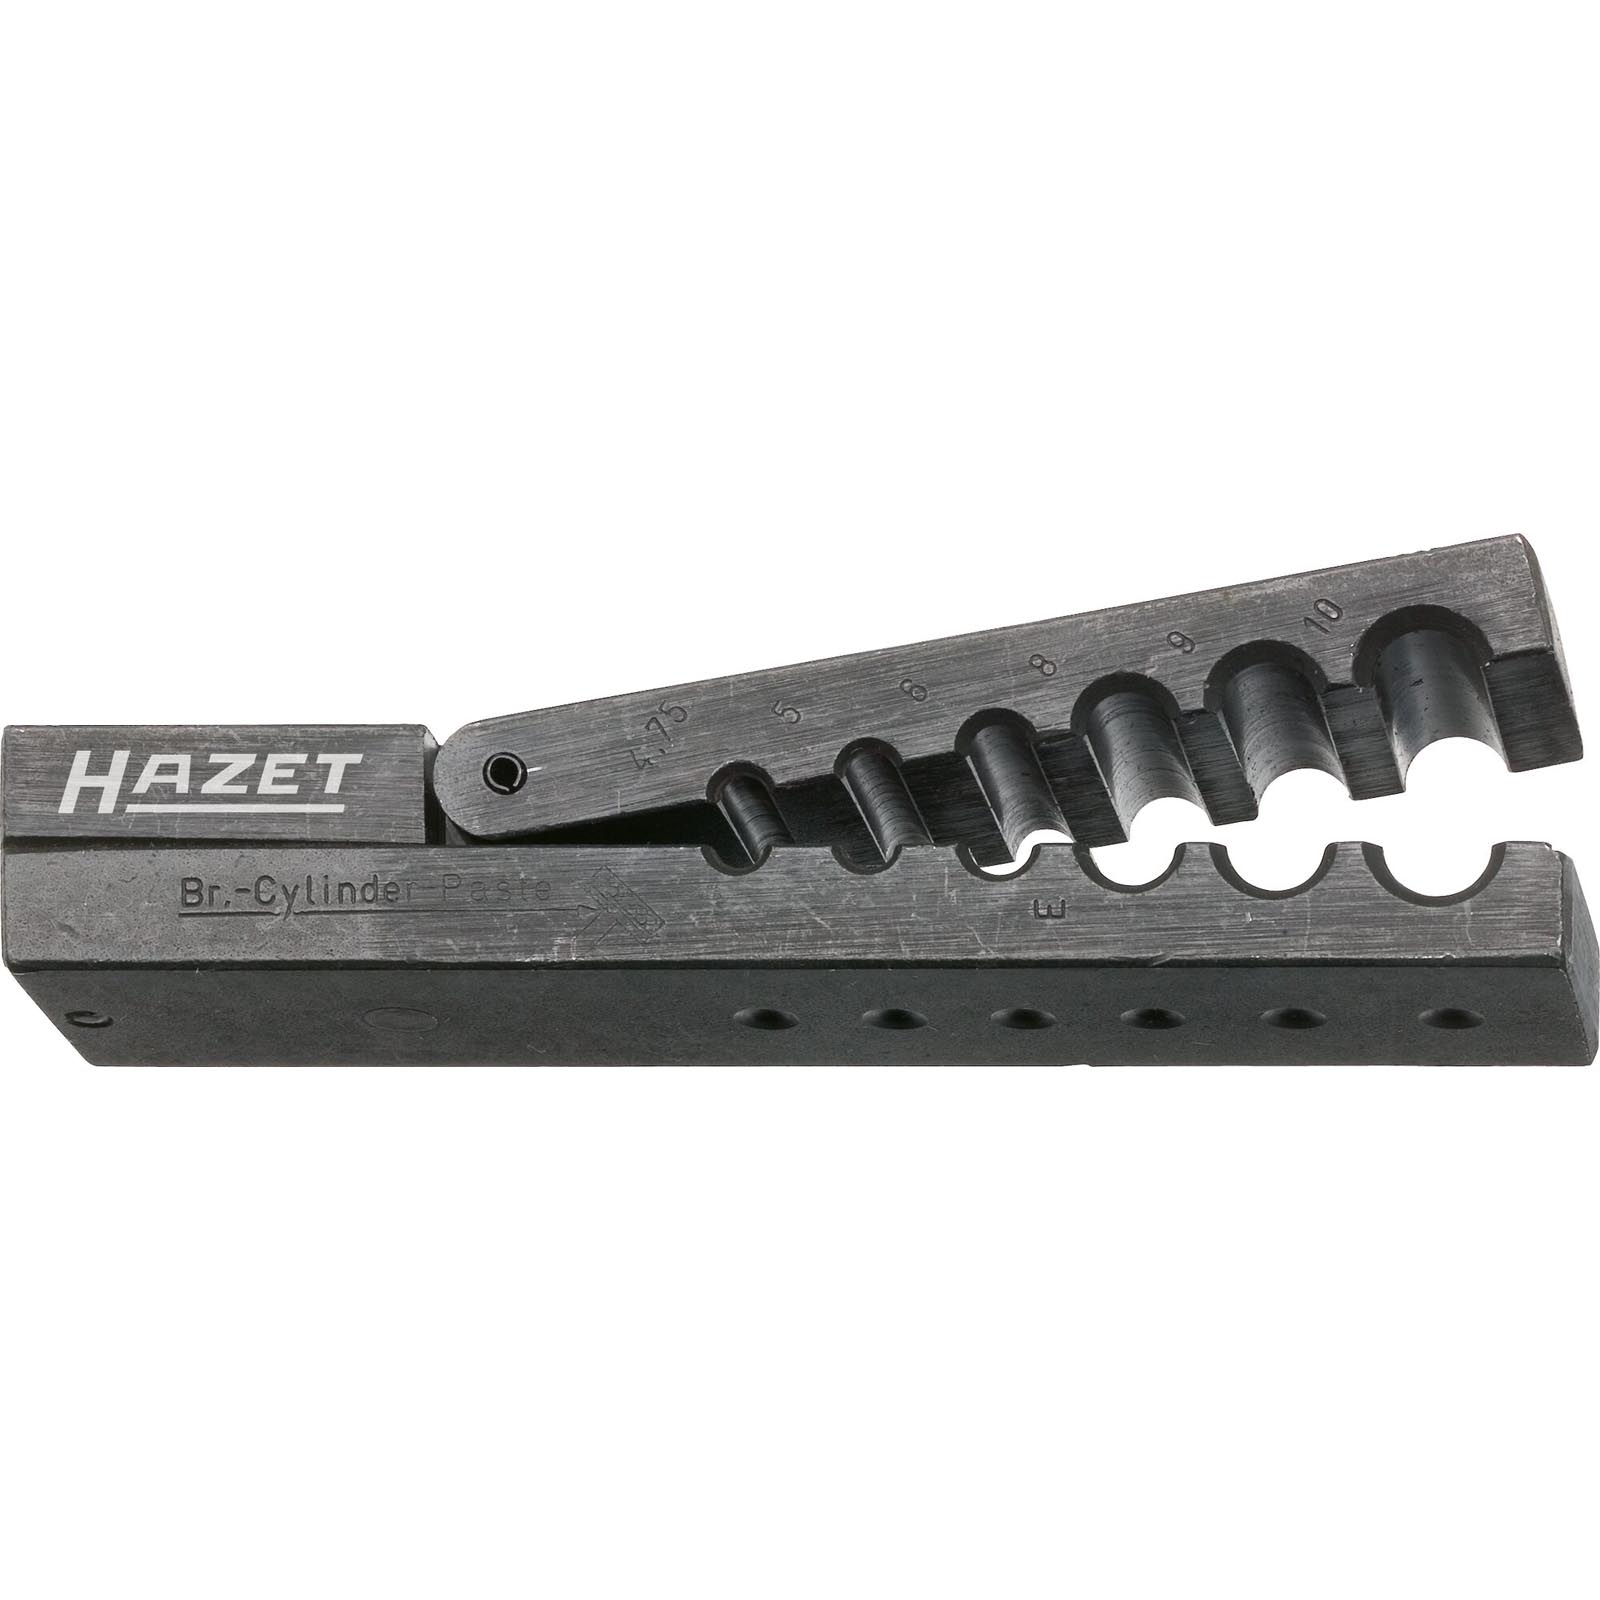 HAZET Thrust Piece, flaring tool